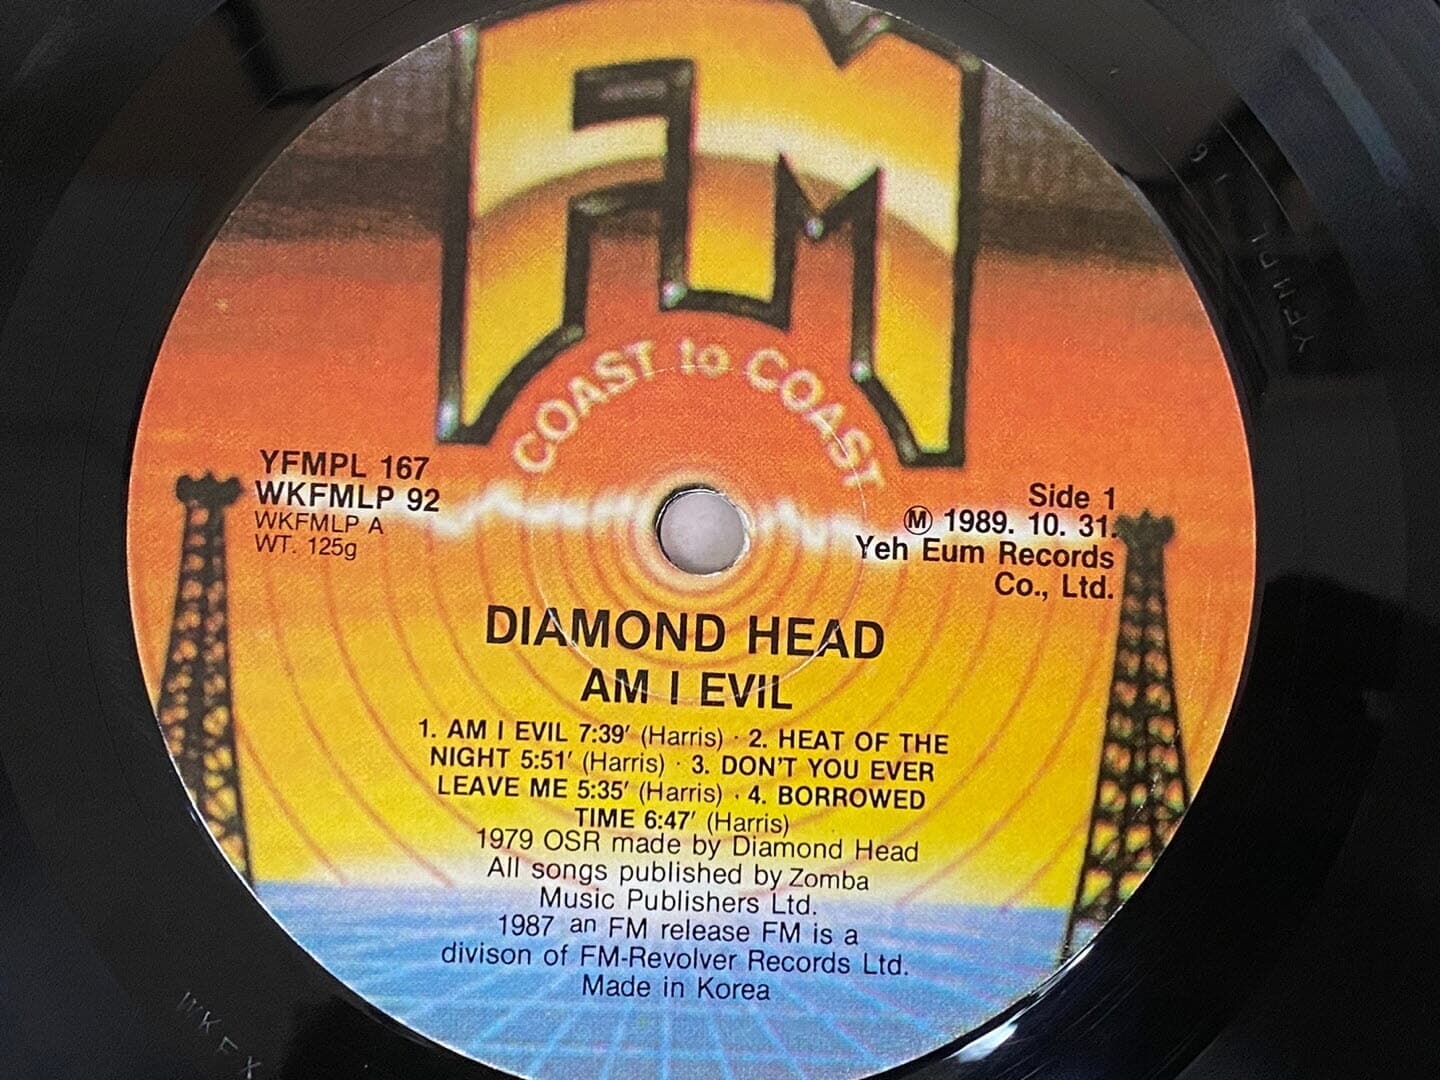 [LP] 다이야몬드 헤드 - Diamond Head - Am I Evil LP [예음-라이센스반]